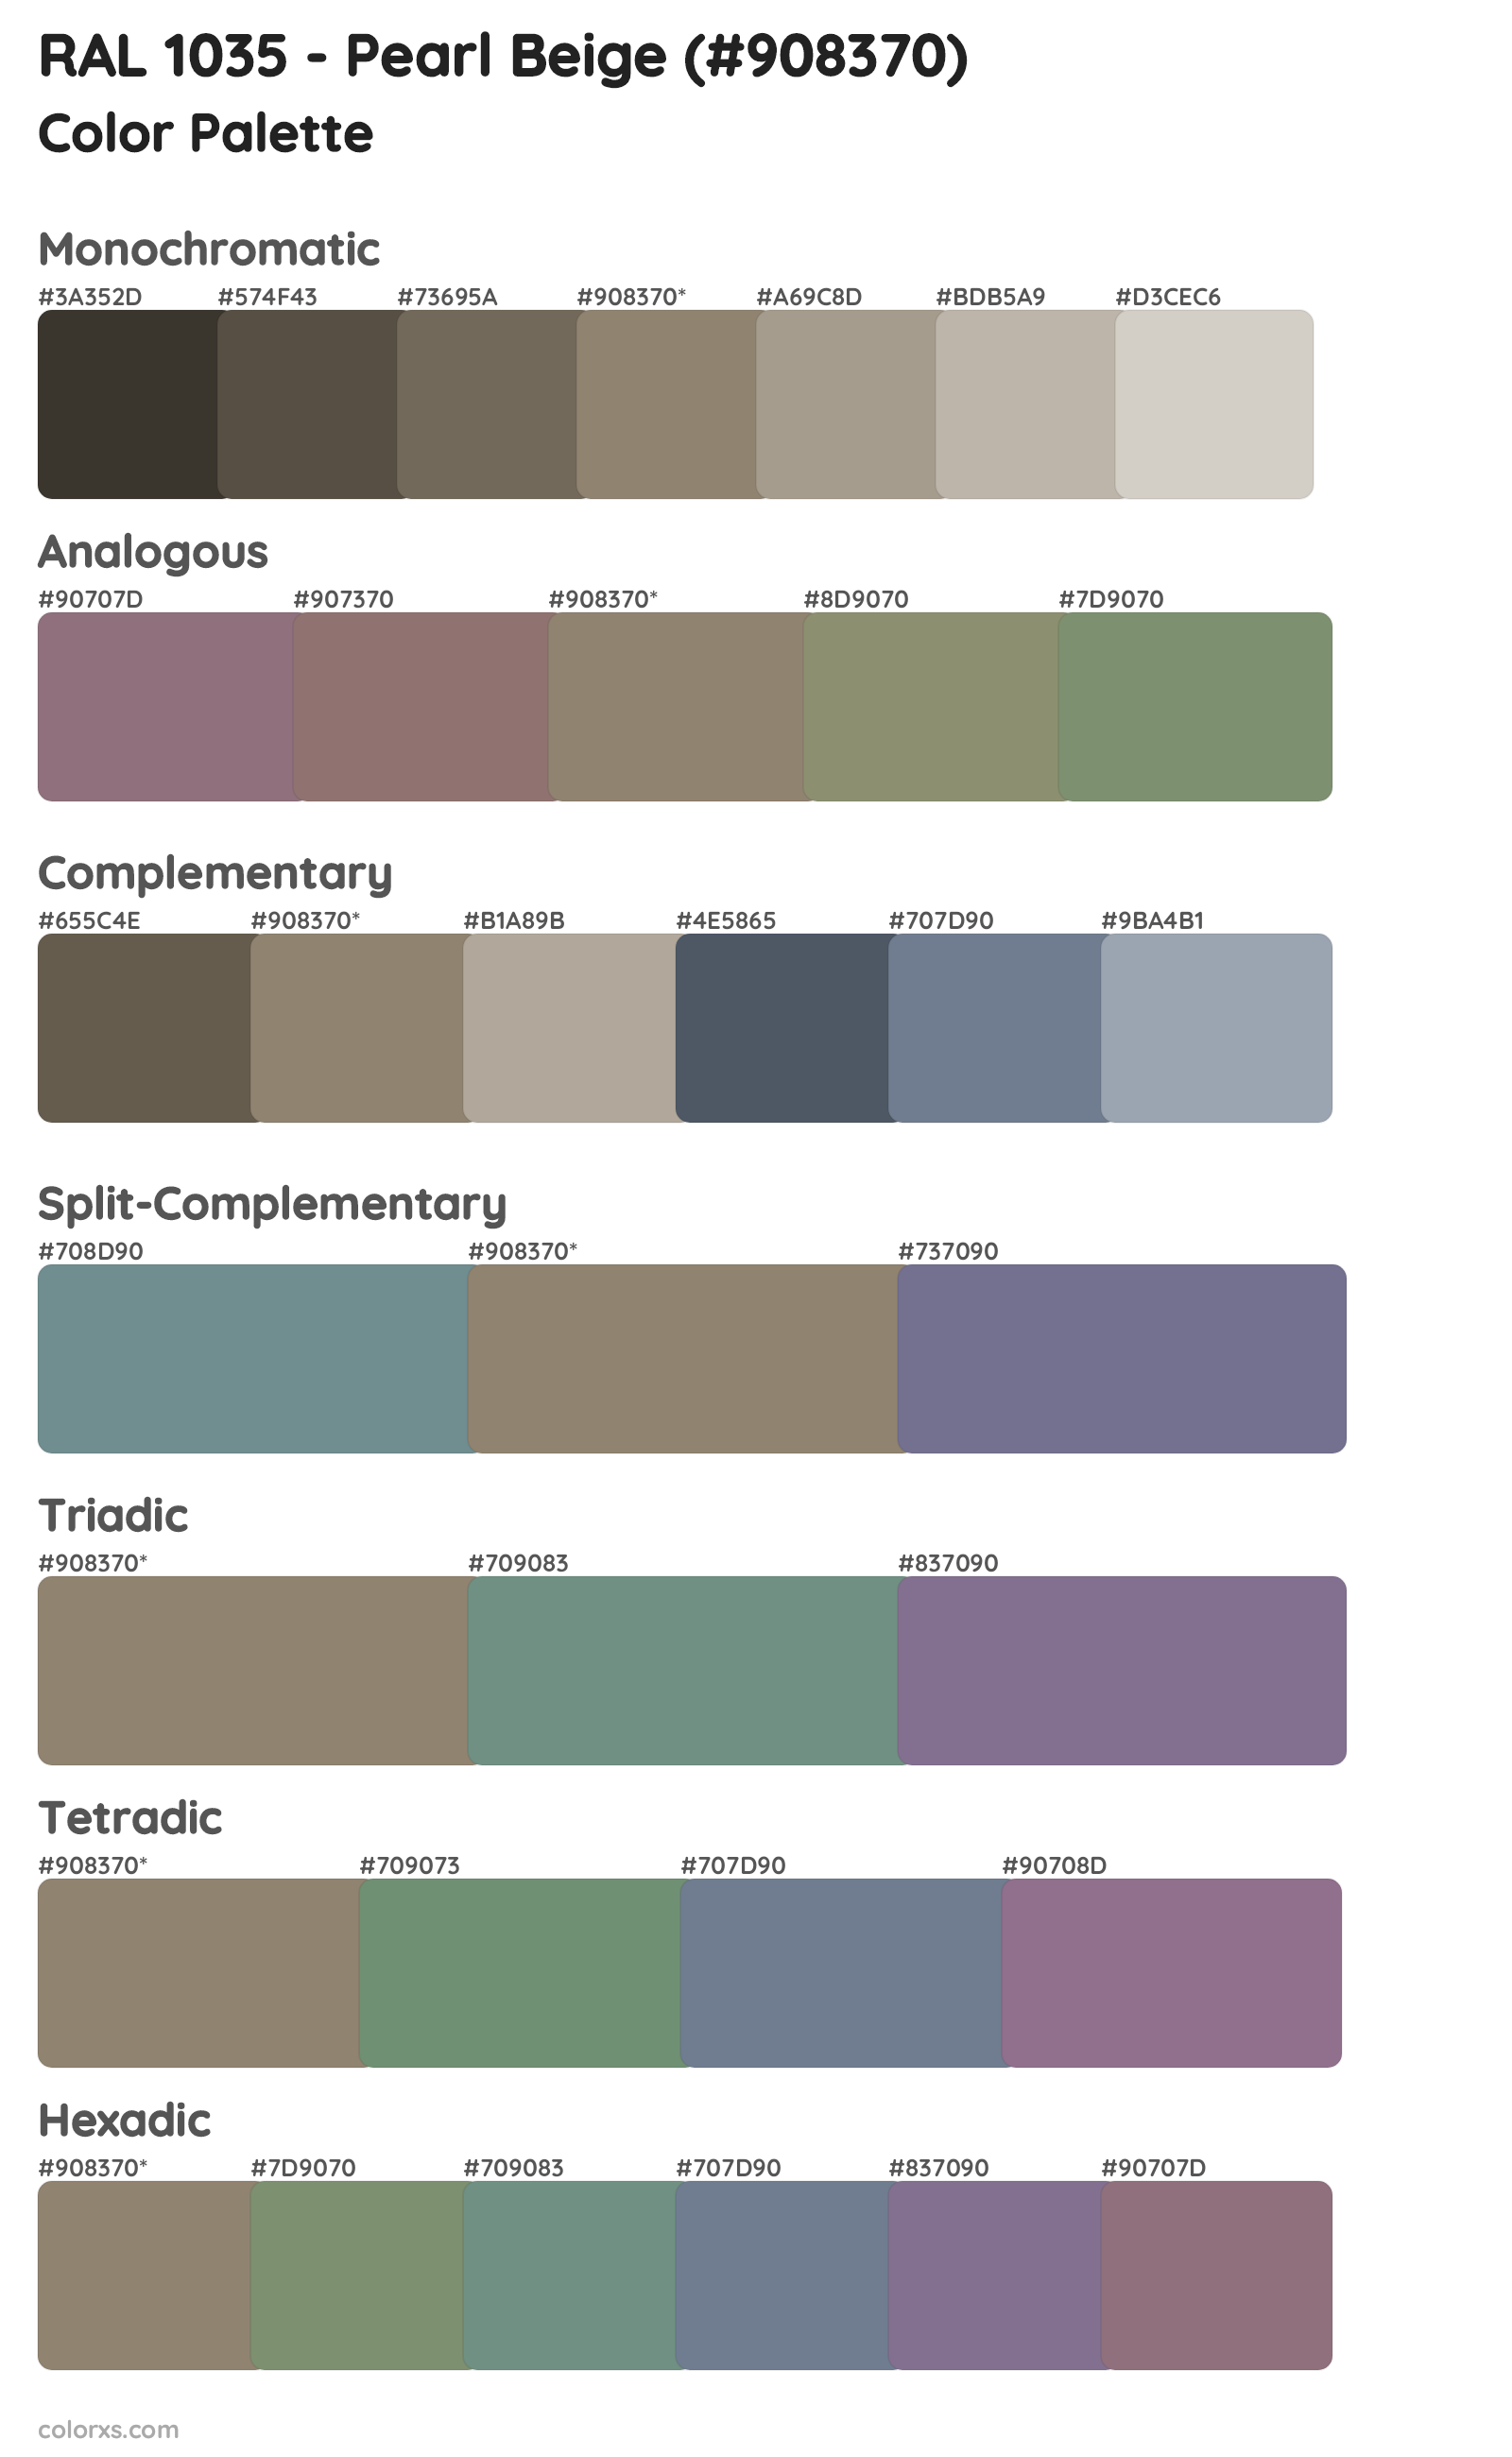 RAL 1035 - Pearl Beige Color Scheme Palettes